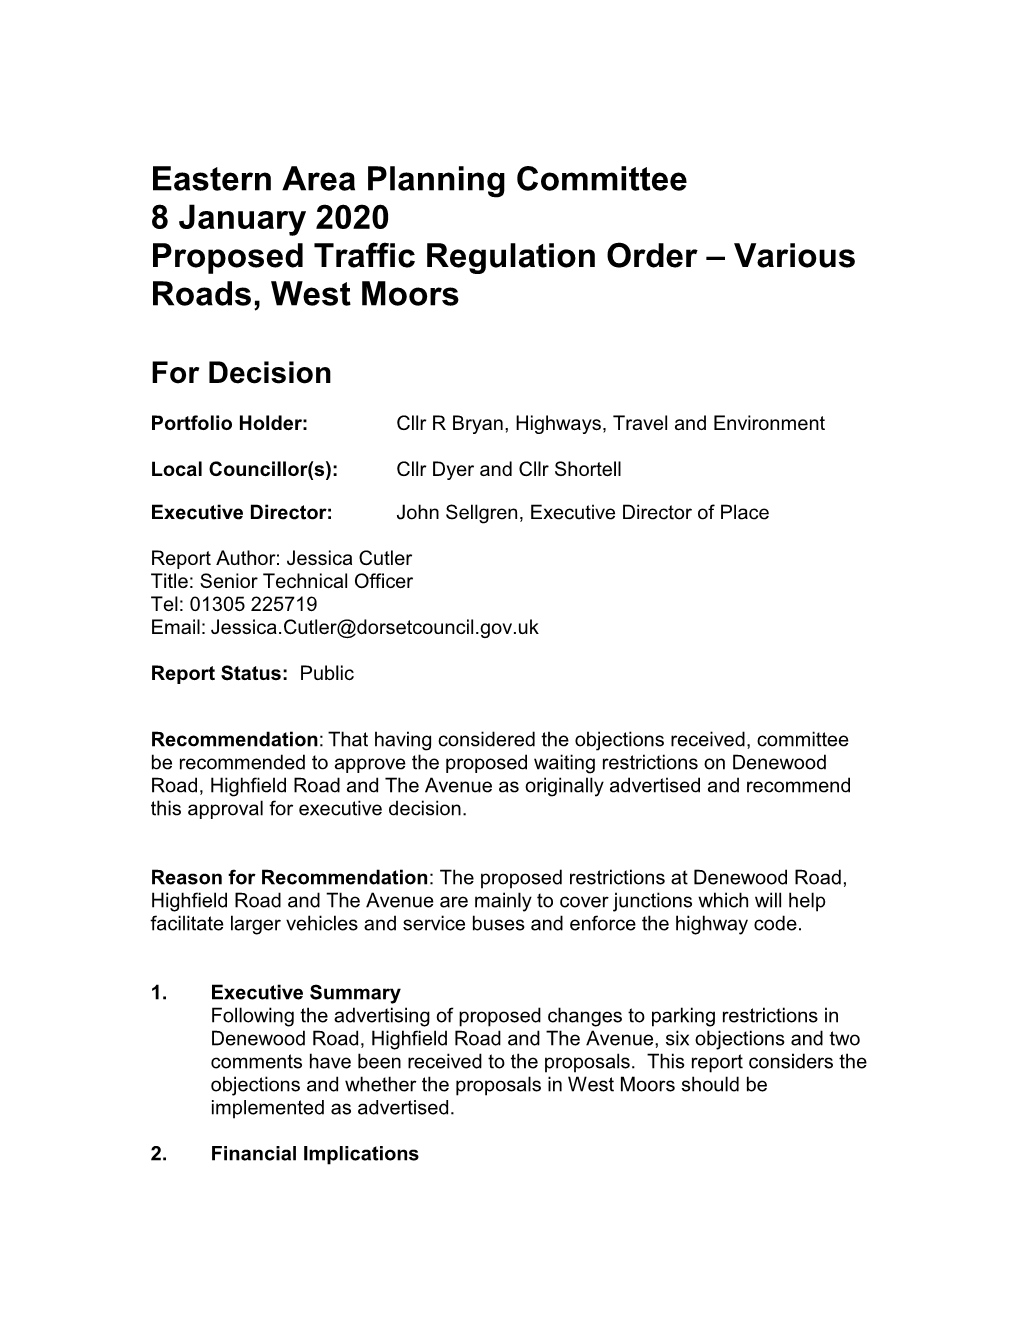 Eastern Area Planning Committee 8 January 2020 Proposed Traffic Regulation Order – Various Roads, West Moors